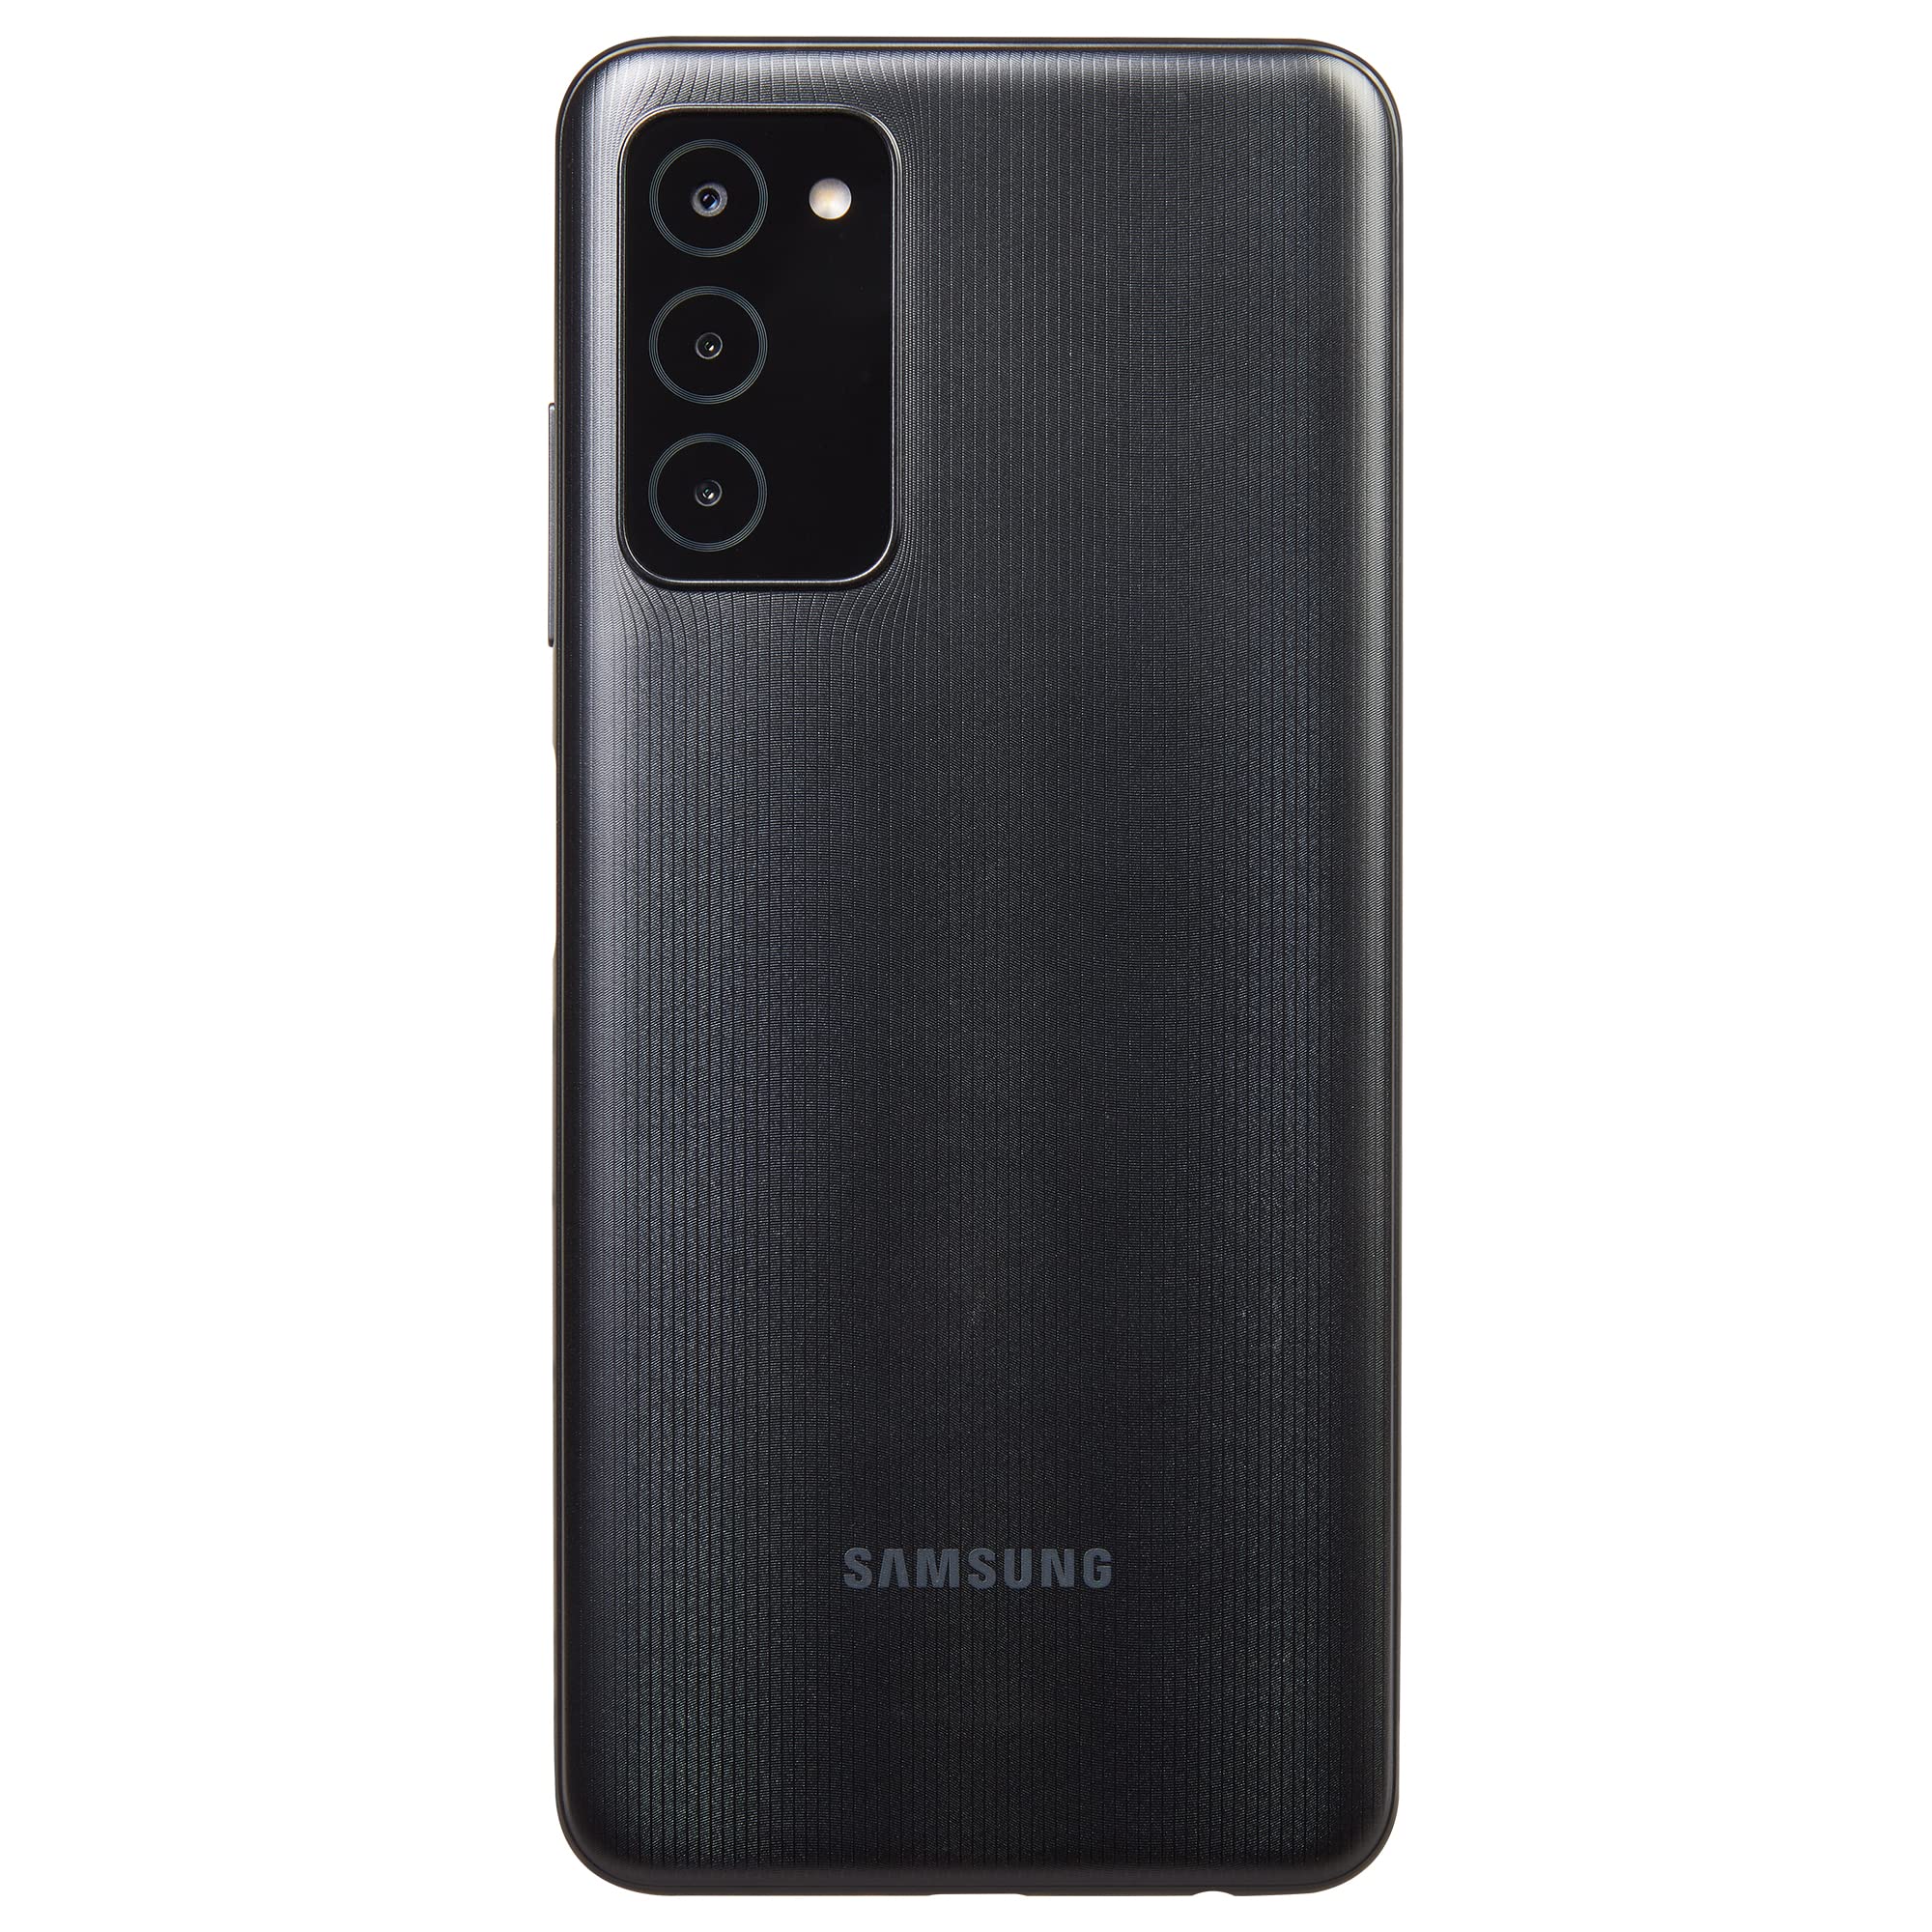 Total by Verizon Samsung Galaxy A03s, 32GB, Black - Prepaid Smartphone (Locked)